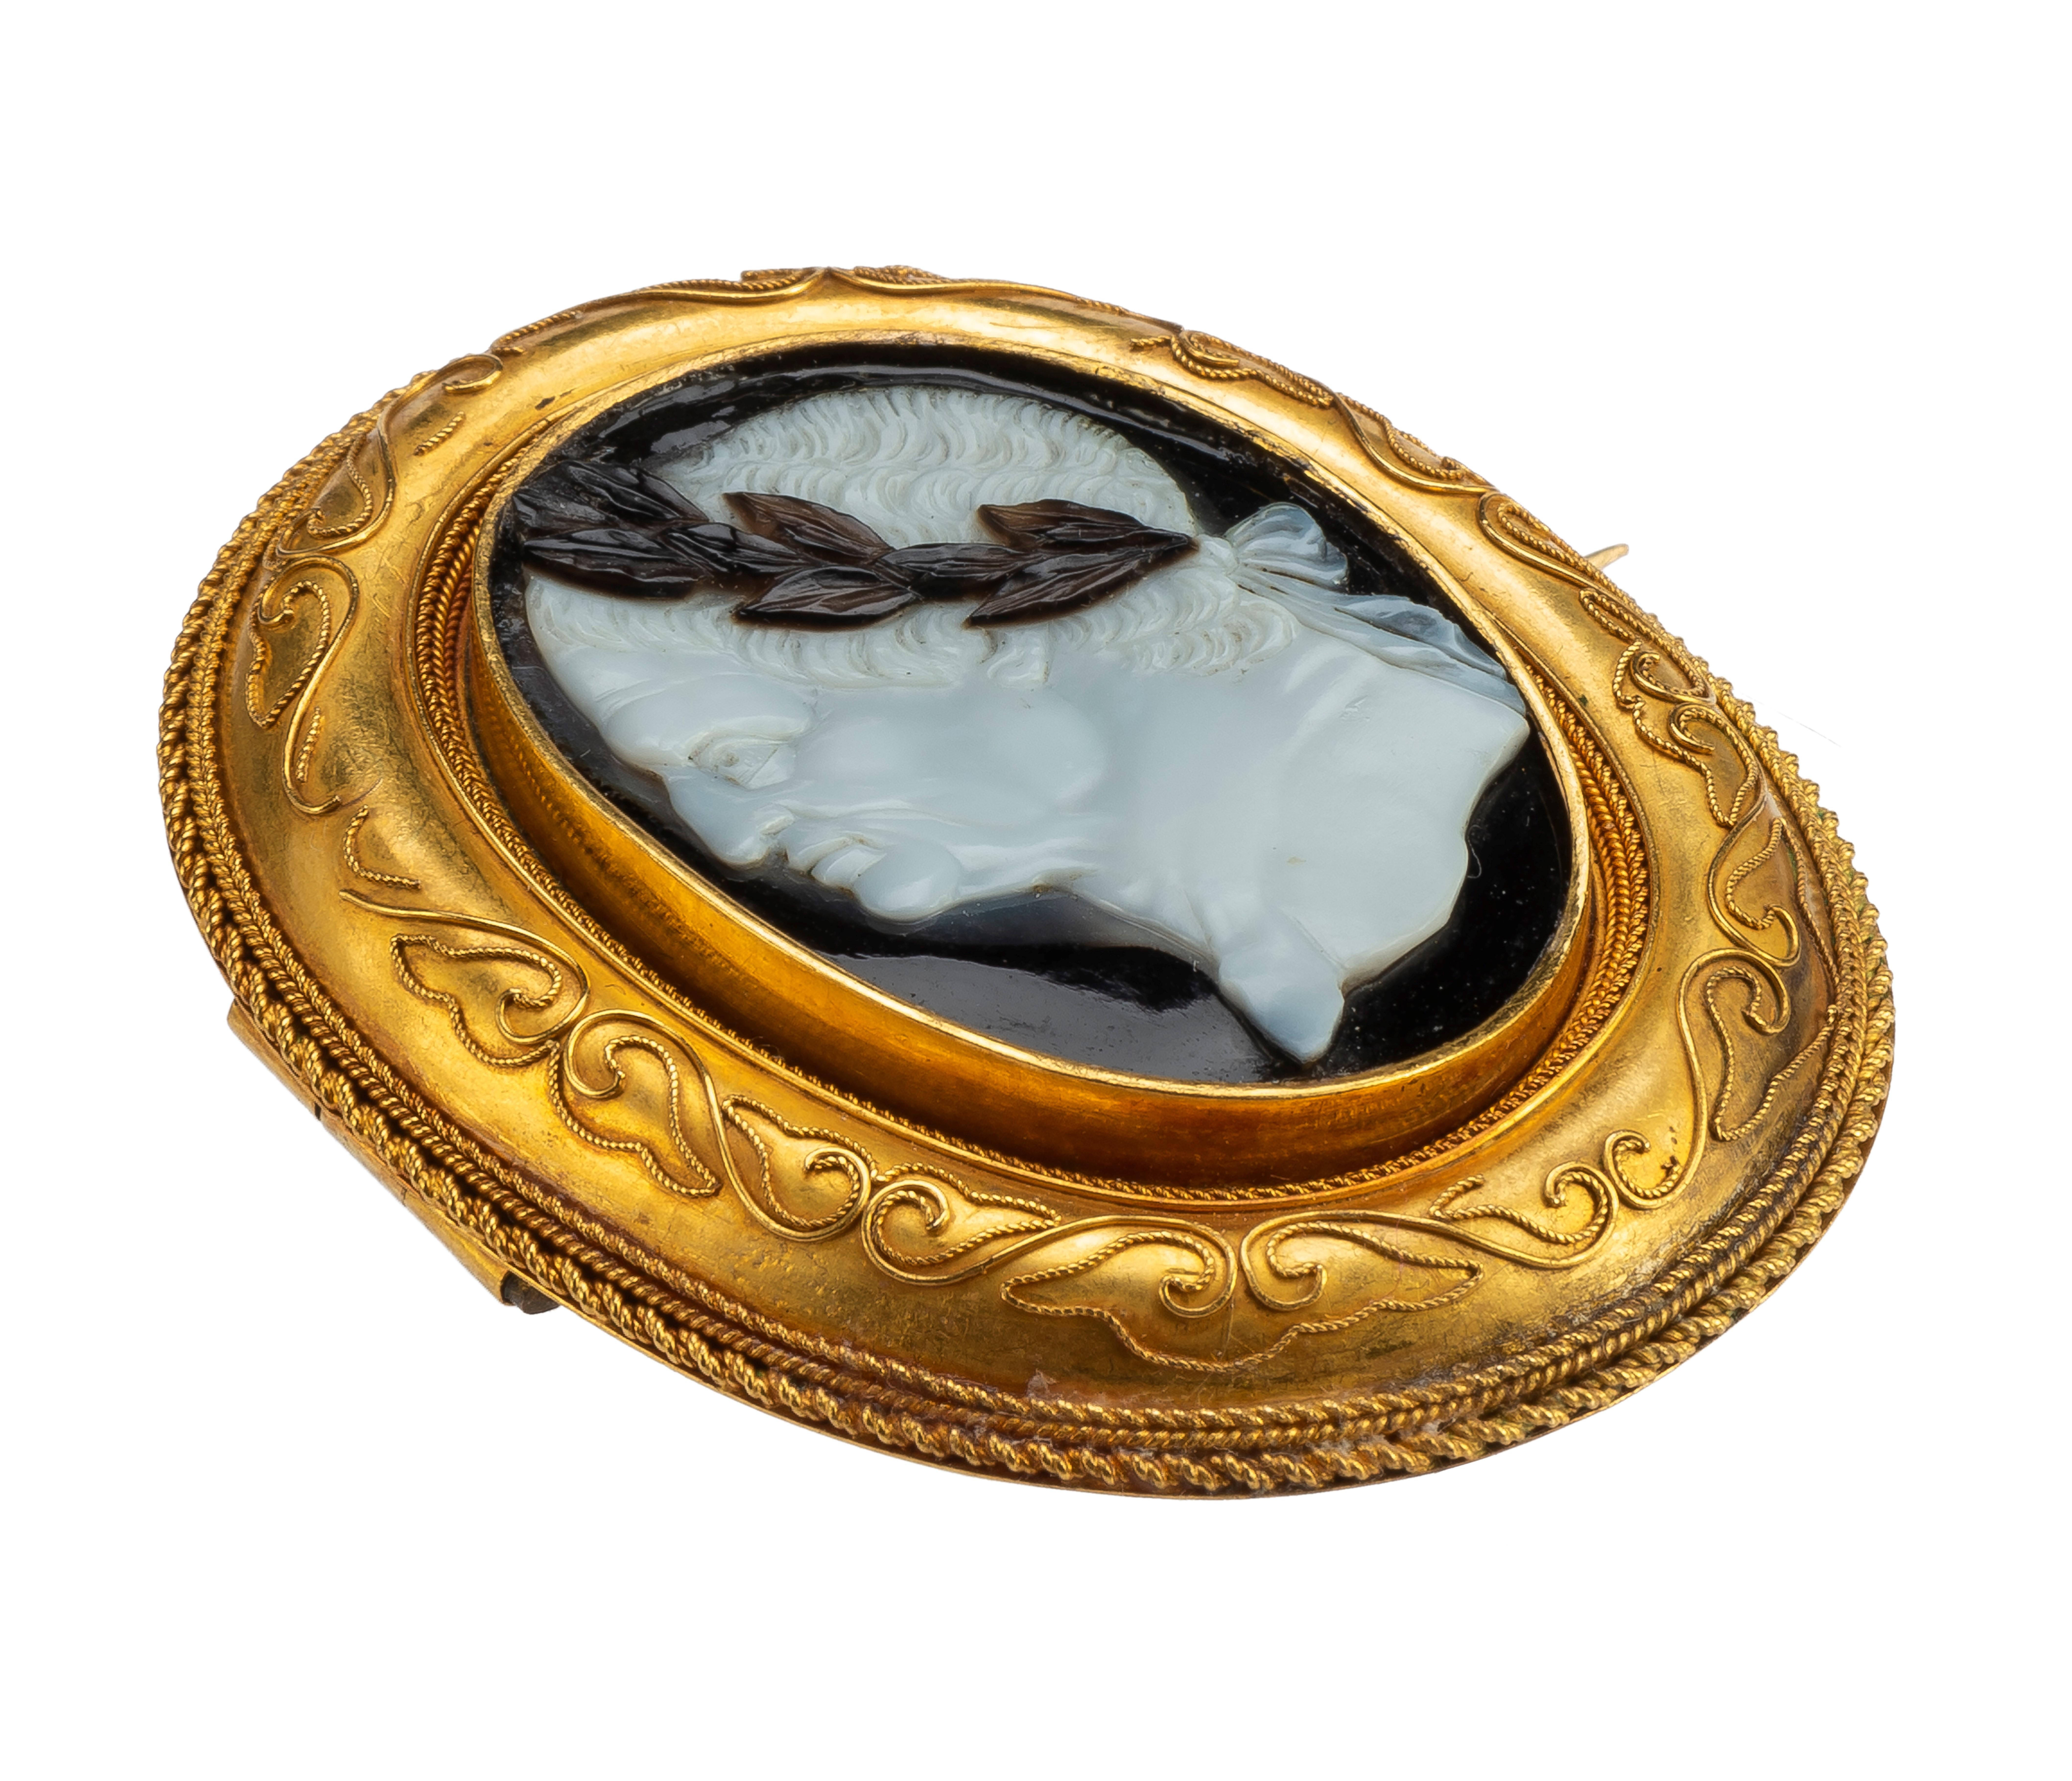 Uncut Renaissance Portrait Cameo of Emperor Vespasian in a Gold Brooch For Sale